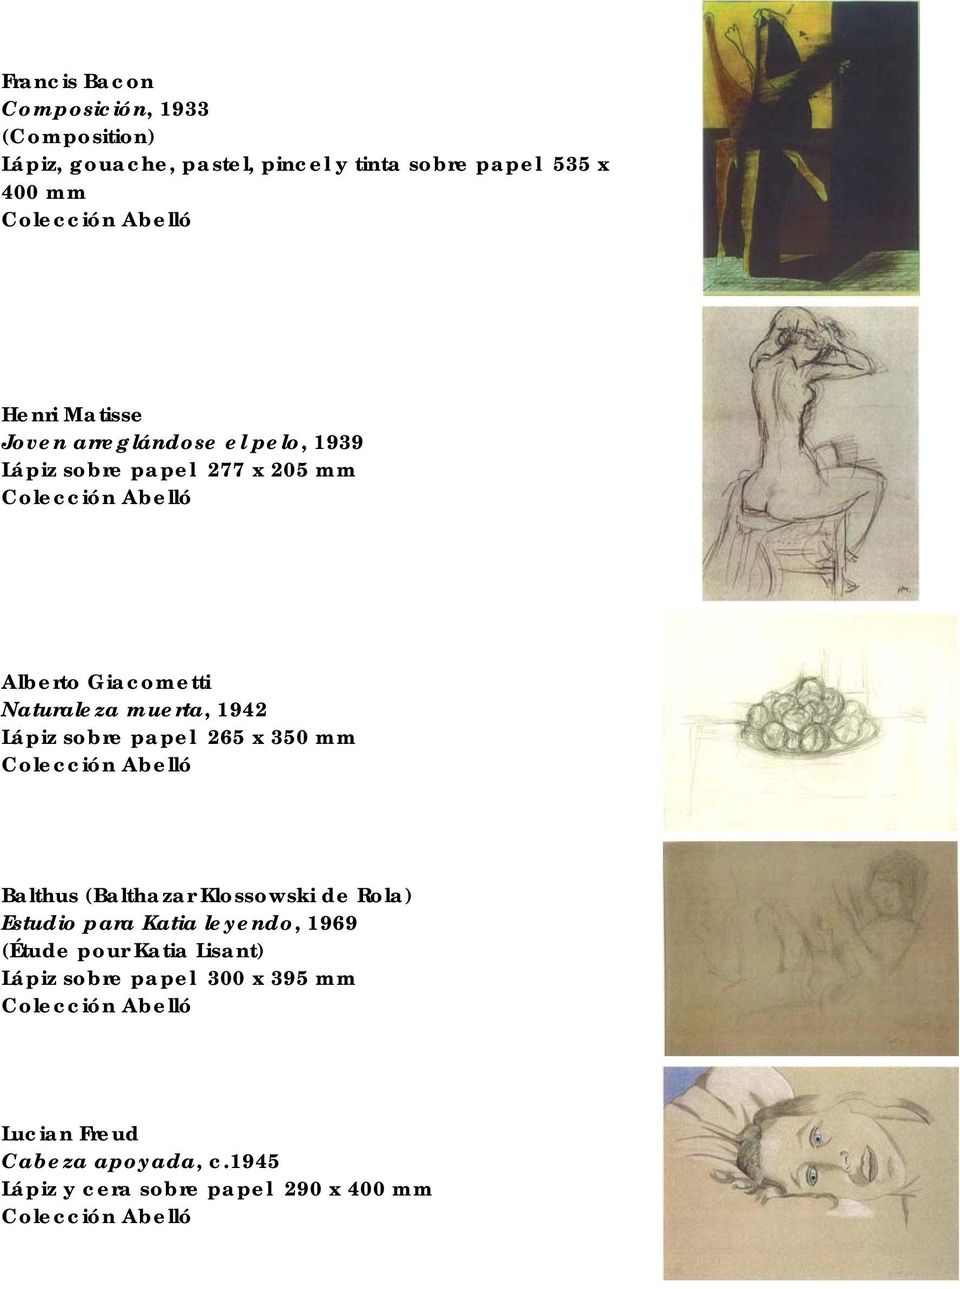 Lápiz sobre papel 265 x 350 mm Balthus (Balthazar Klossowski de Rola) Estudio para Katia leyendo, 1969 (Étude pour